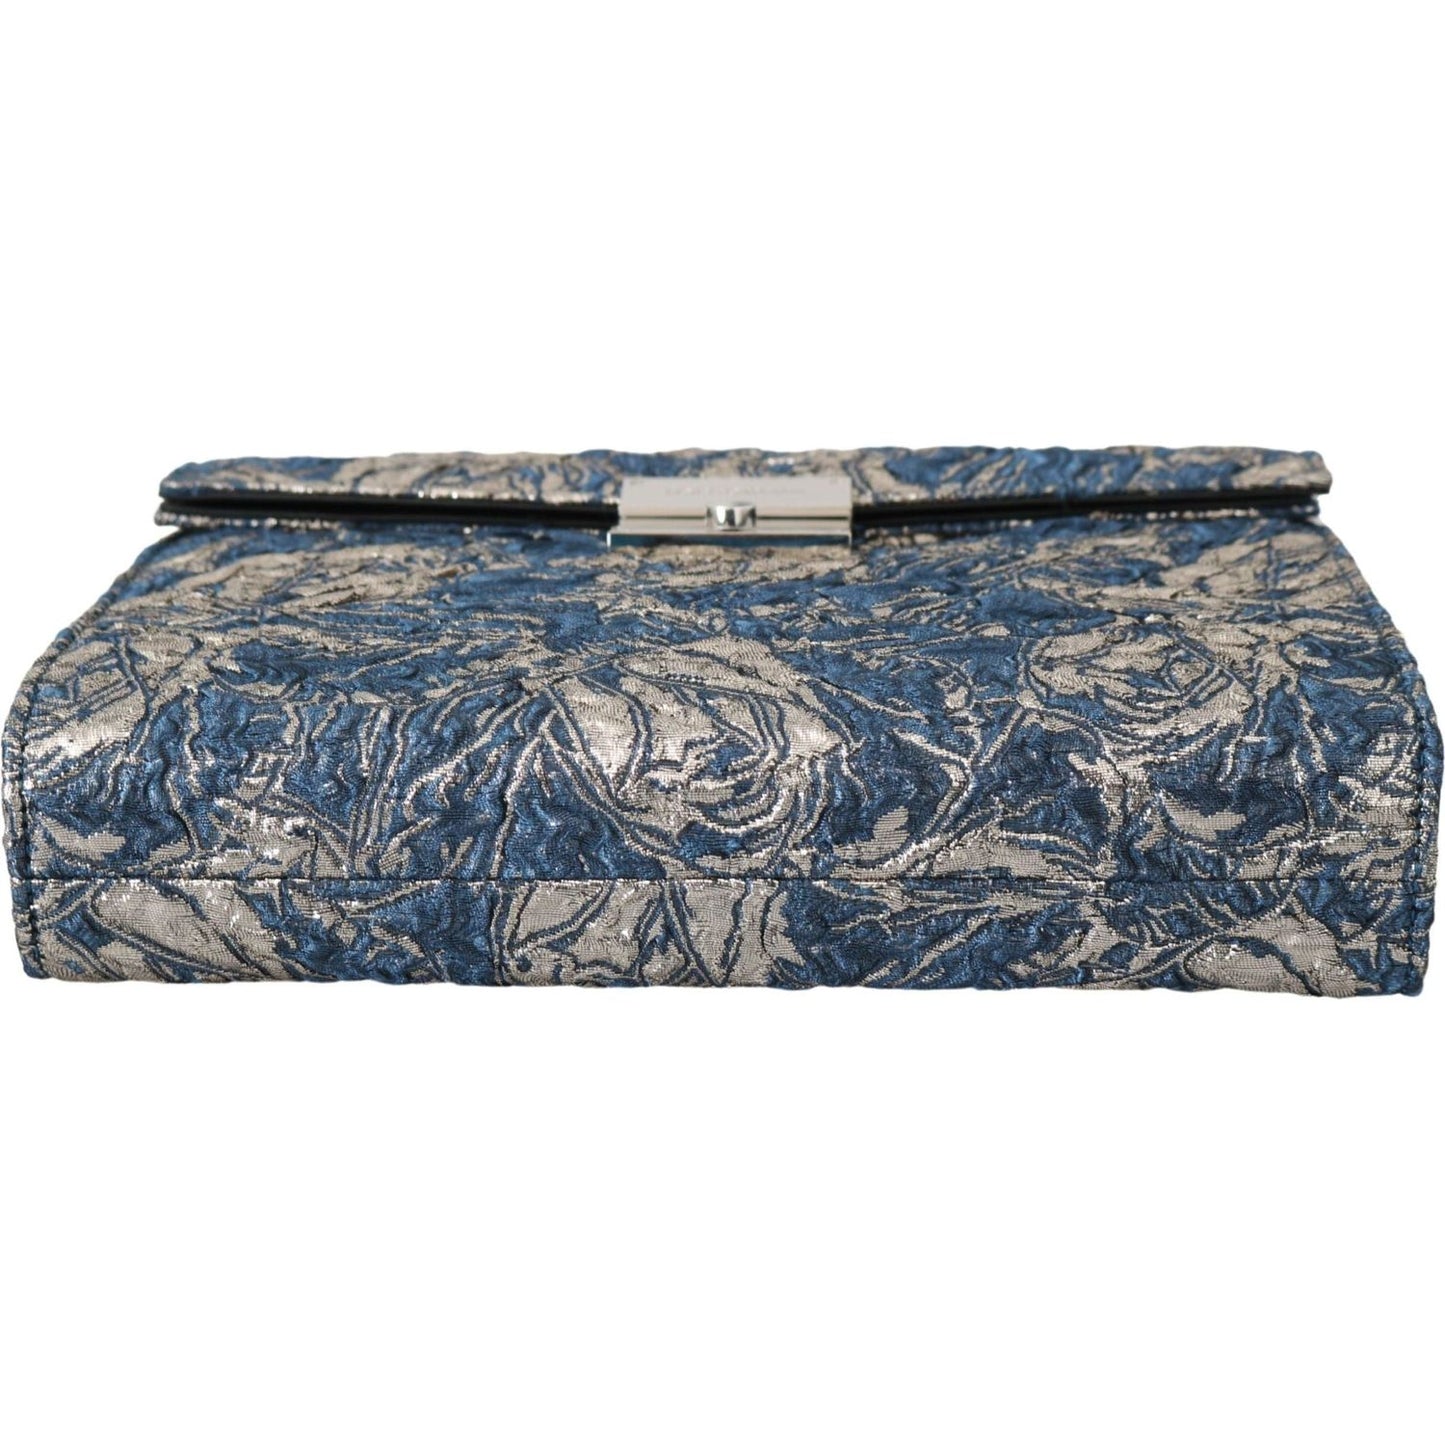 Dolce & Gabbana Elegant Blue Croc-Print Briefcase Clutch Briefcase blue-silver-jacquard-leather-document-briefcase-bag IMG_0201-1-scaled-f85e7573-27b.jpg